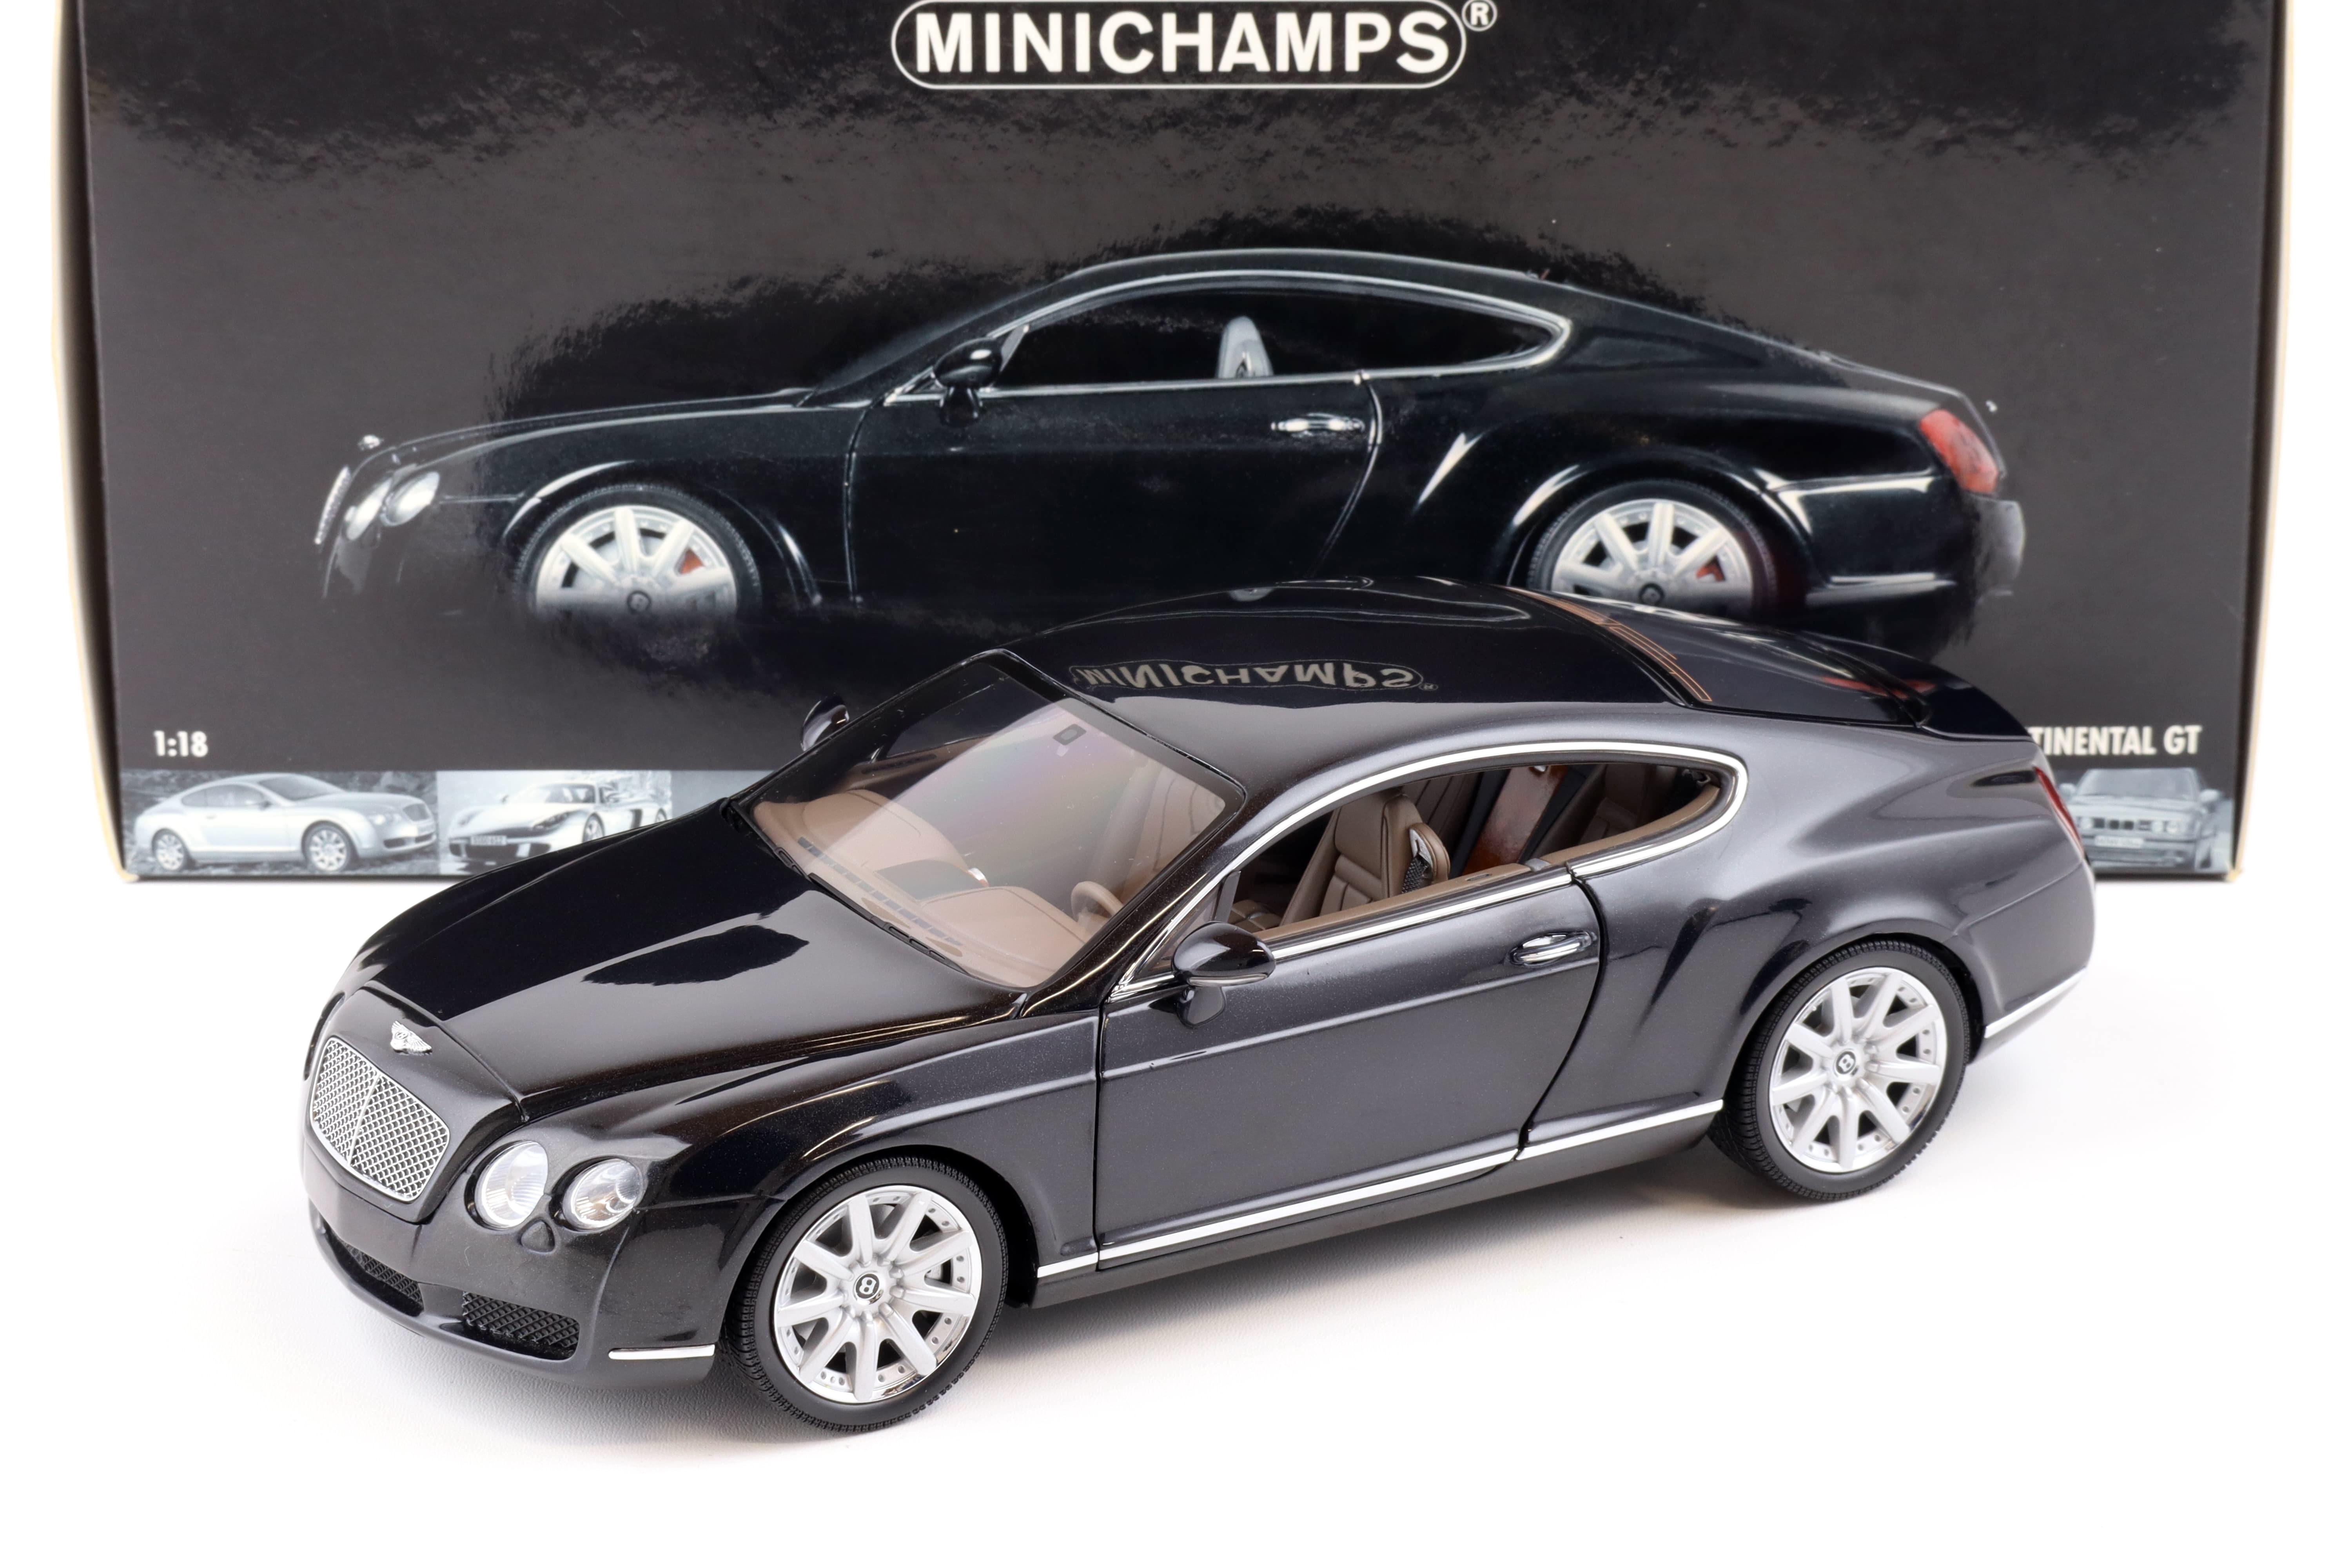 1:18 Minichamps Bentley Continental GT Coupe 2006 black metallic